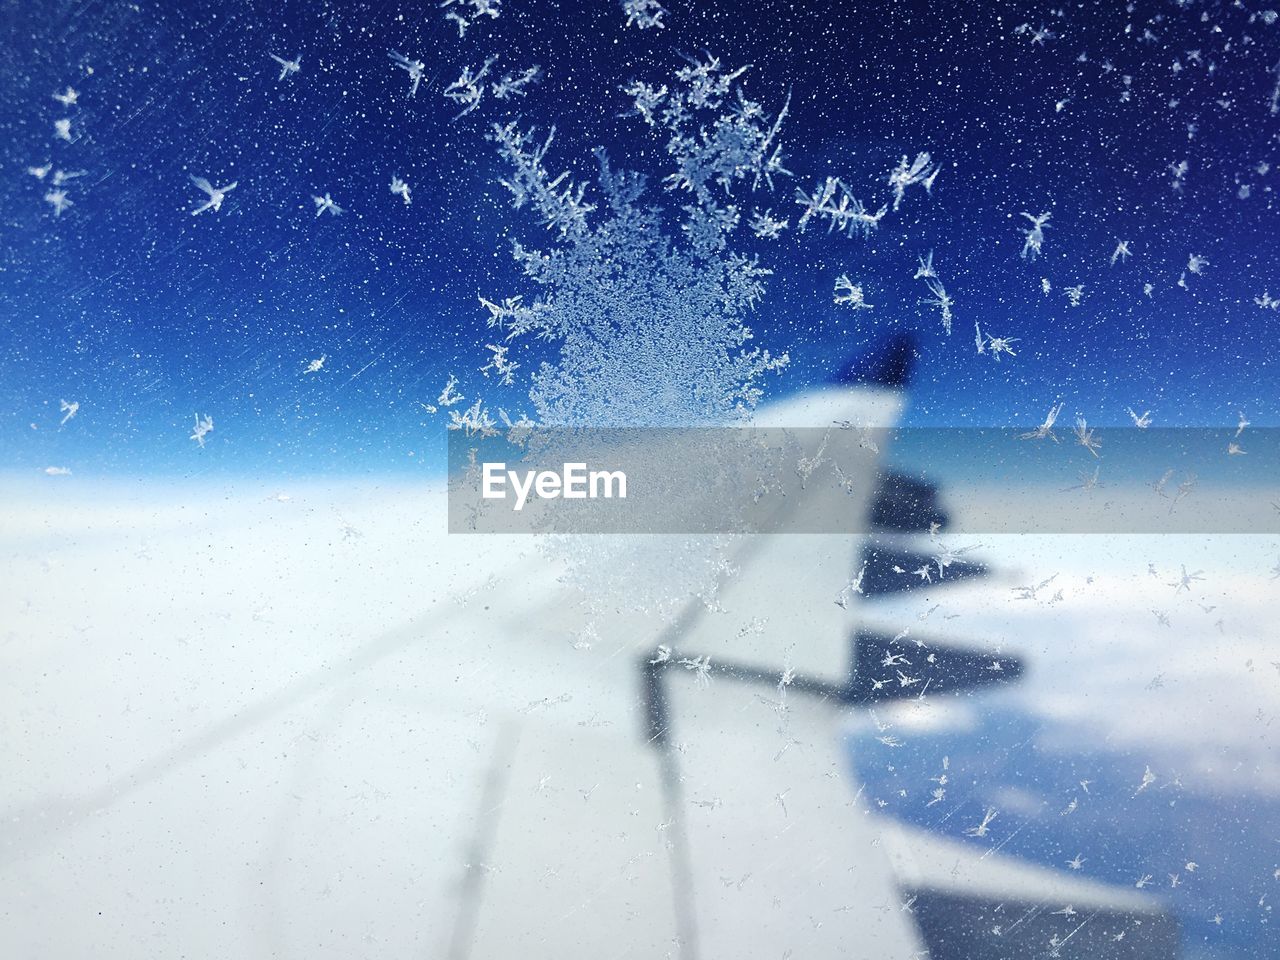 Ice crystals on airplane window